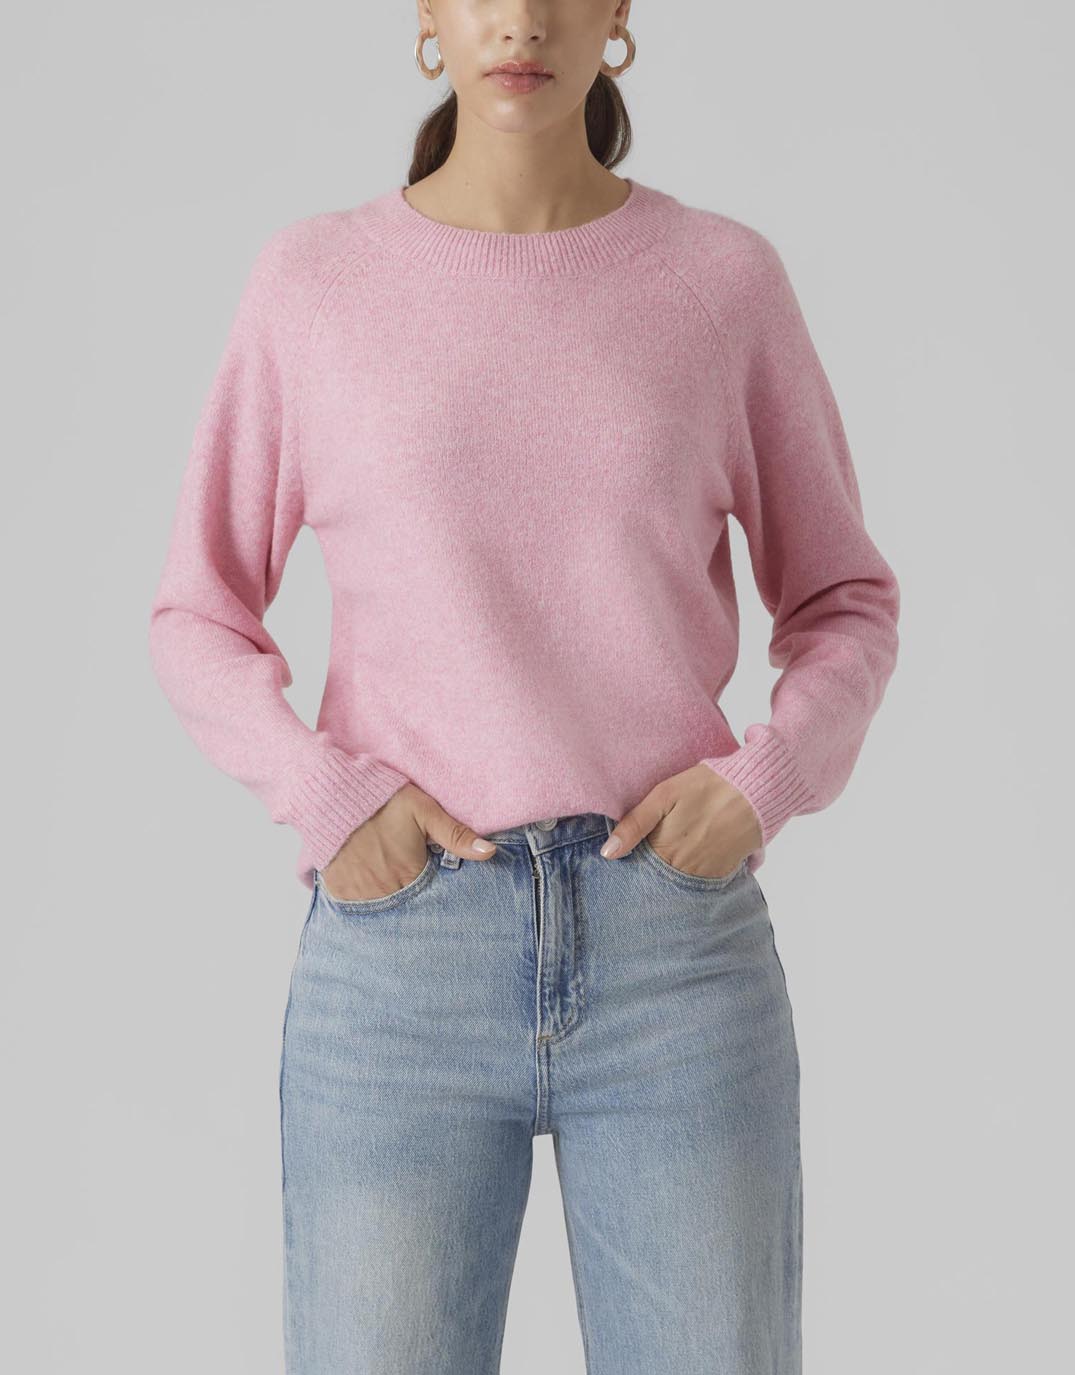 vero-moda-doffy-knit-sachet-pink-womens-clothing